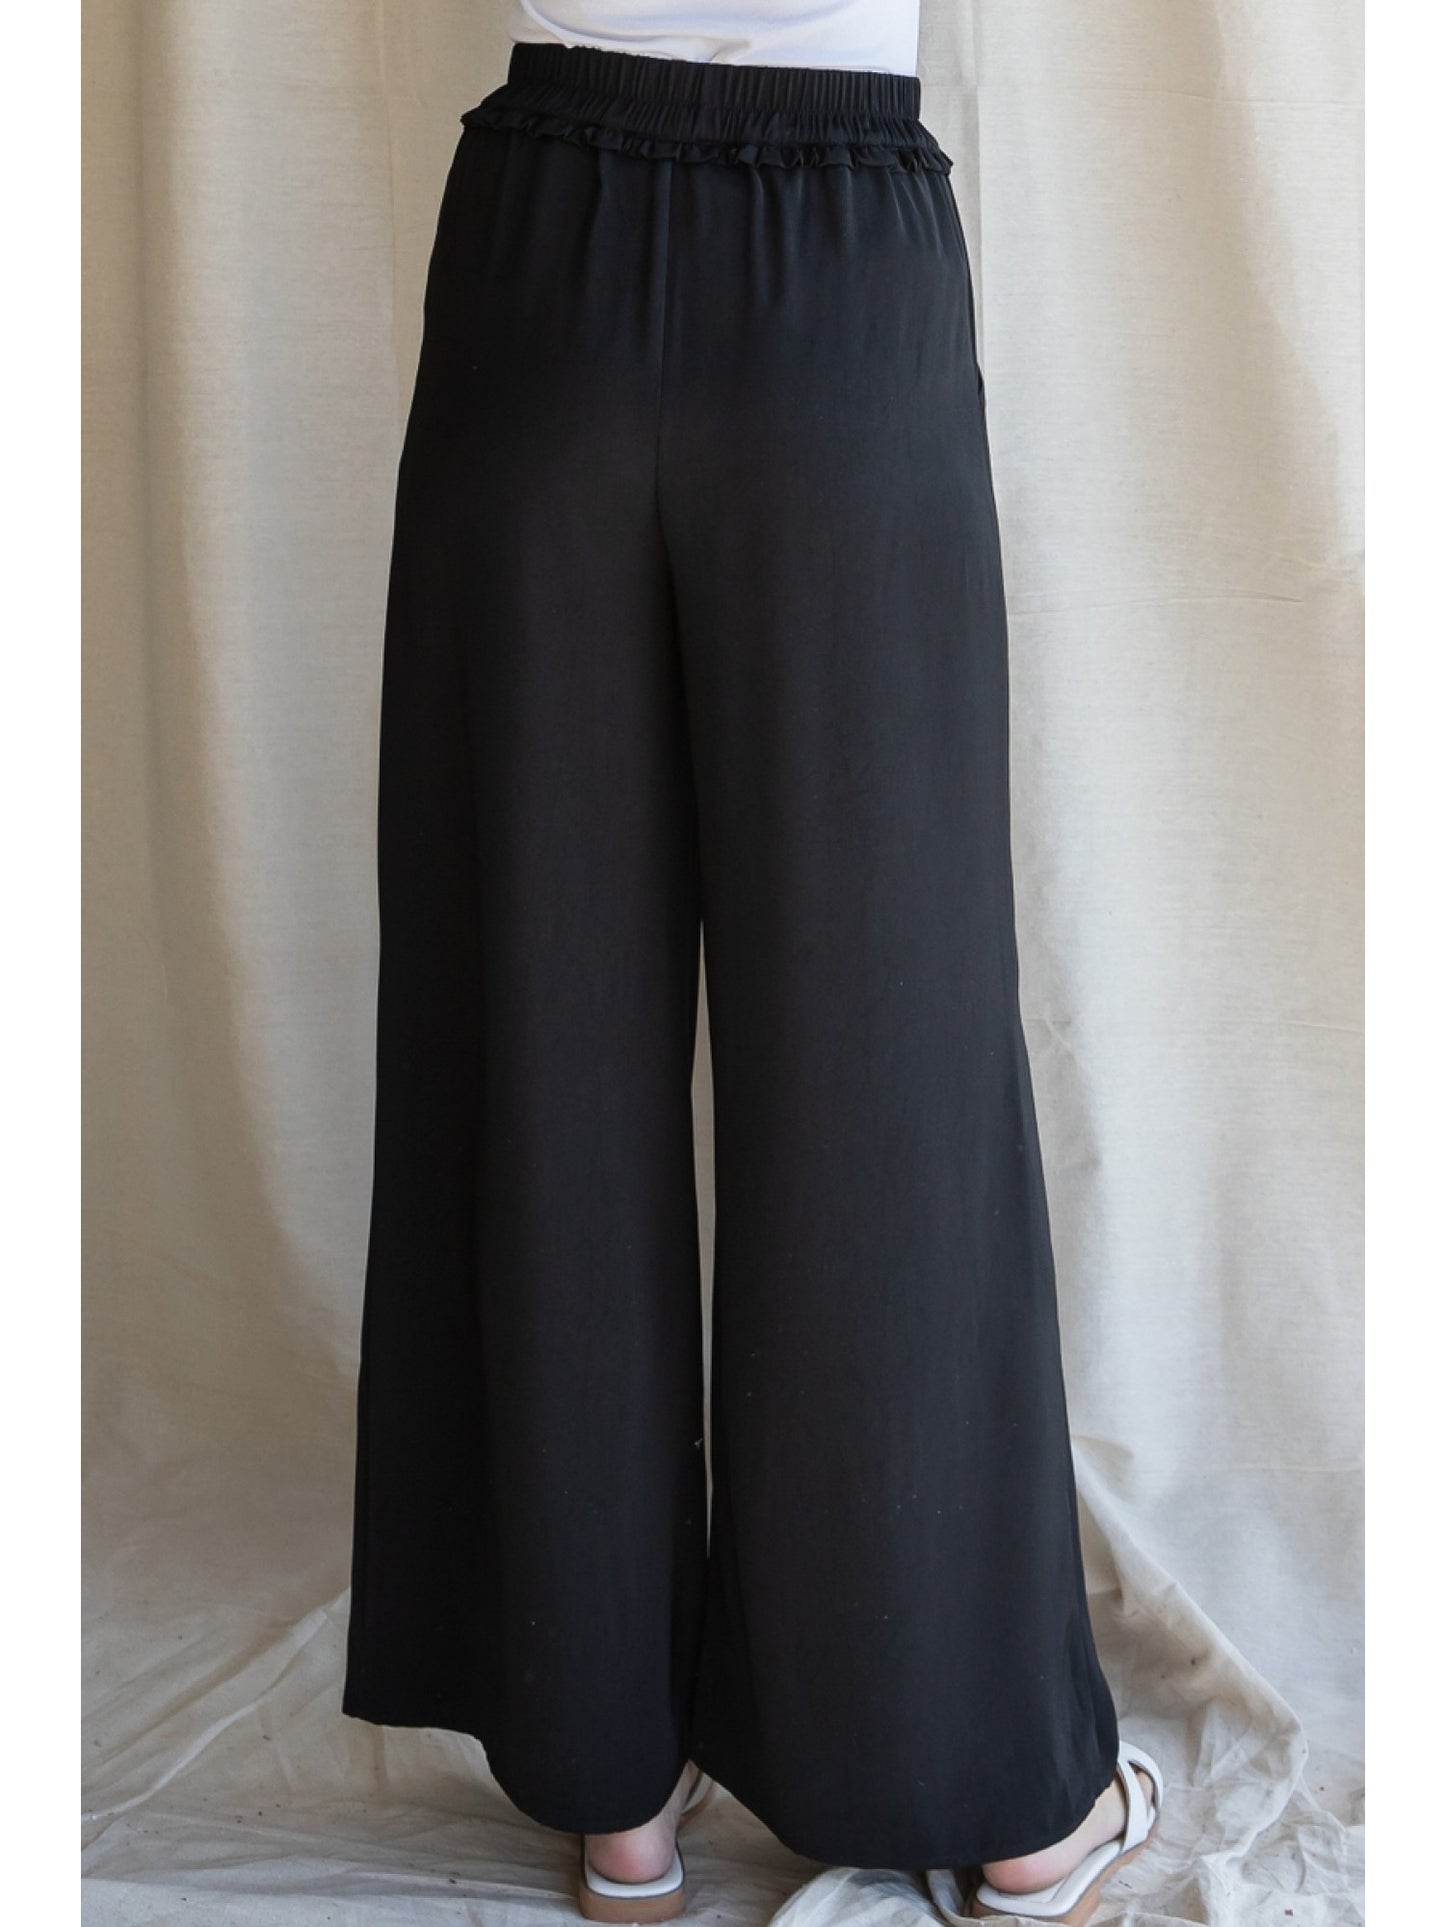 Black Drawstring Pants w/ Pockets